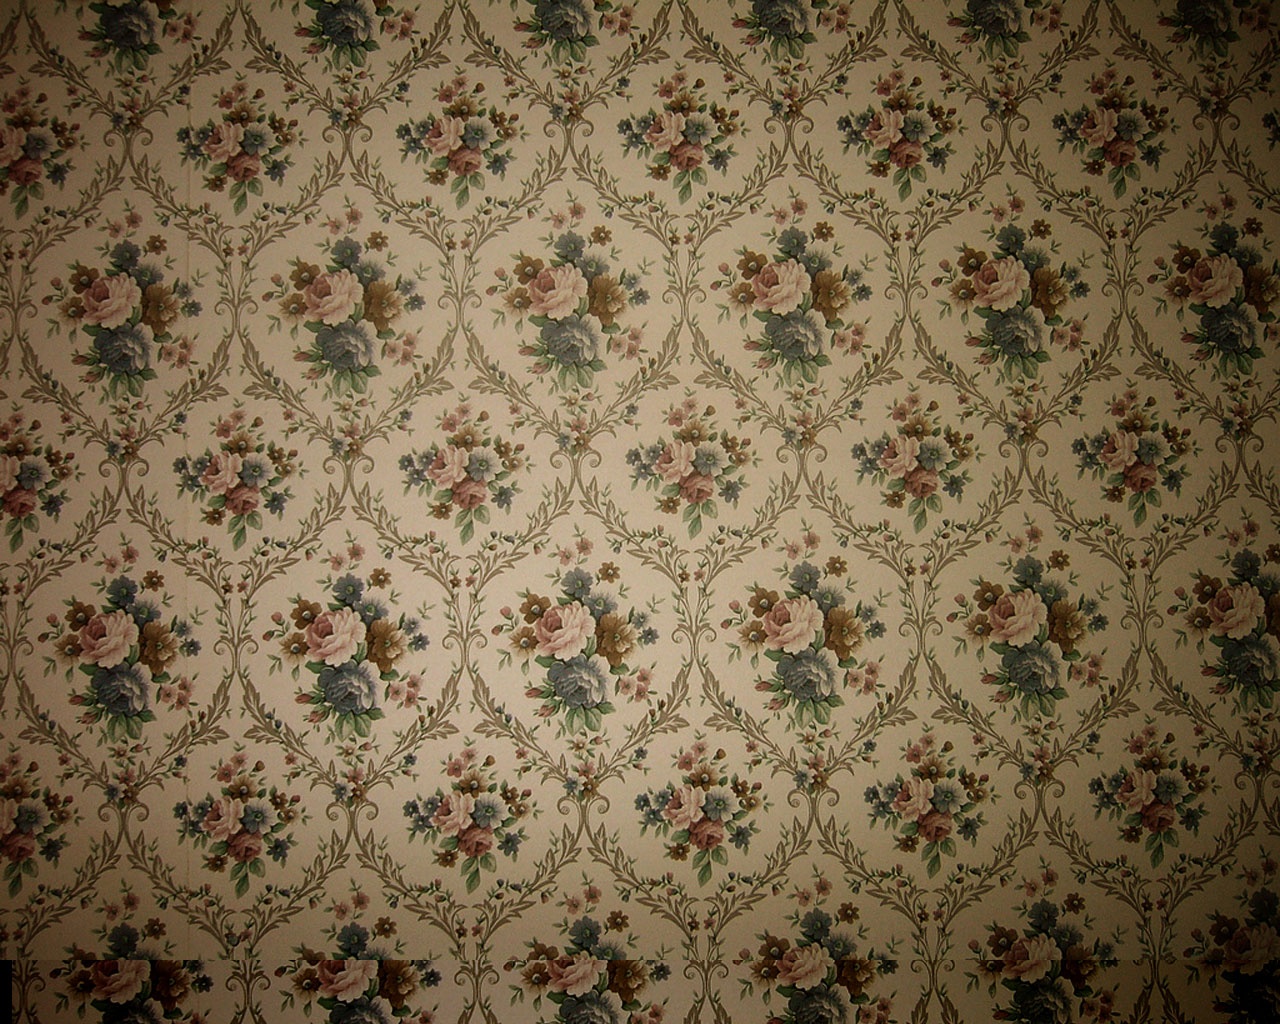 Wallpaper Patterns Oldtimewallpaper Antique